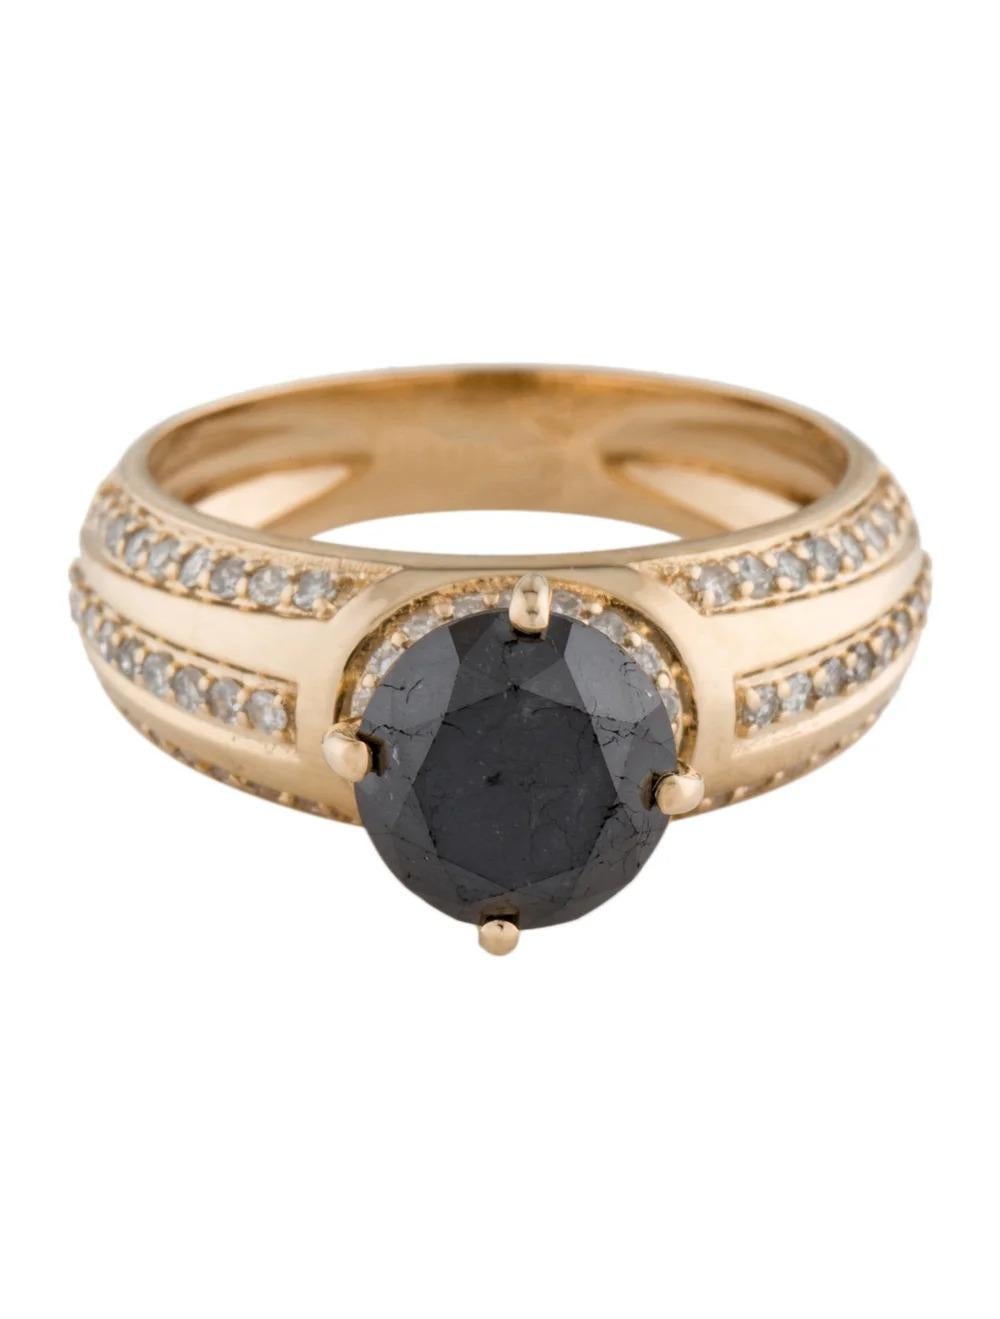 Round Cut 14K Diamond Cocktail Ring 2.69ctw - Size 6.75 - Statement Jewelry, Luxury Piece For Sale